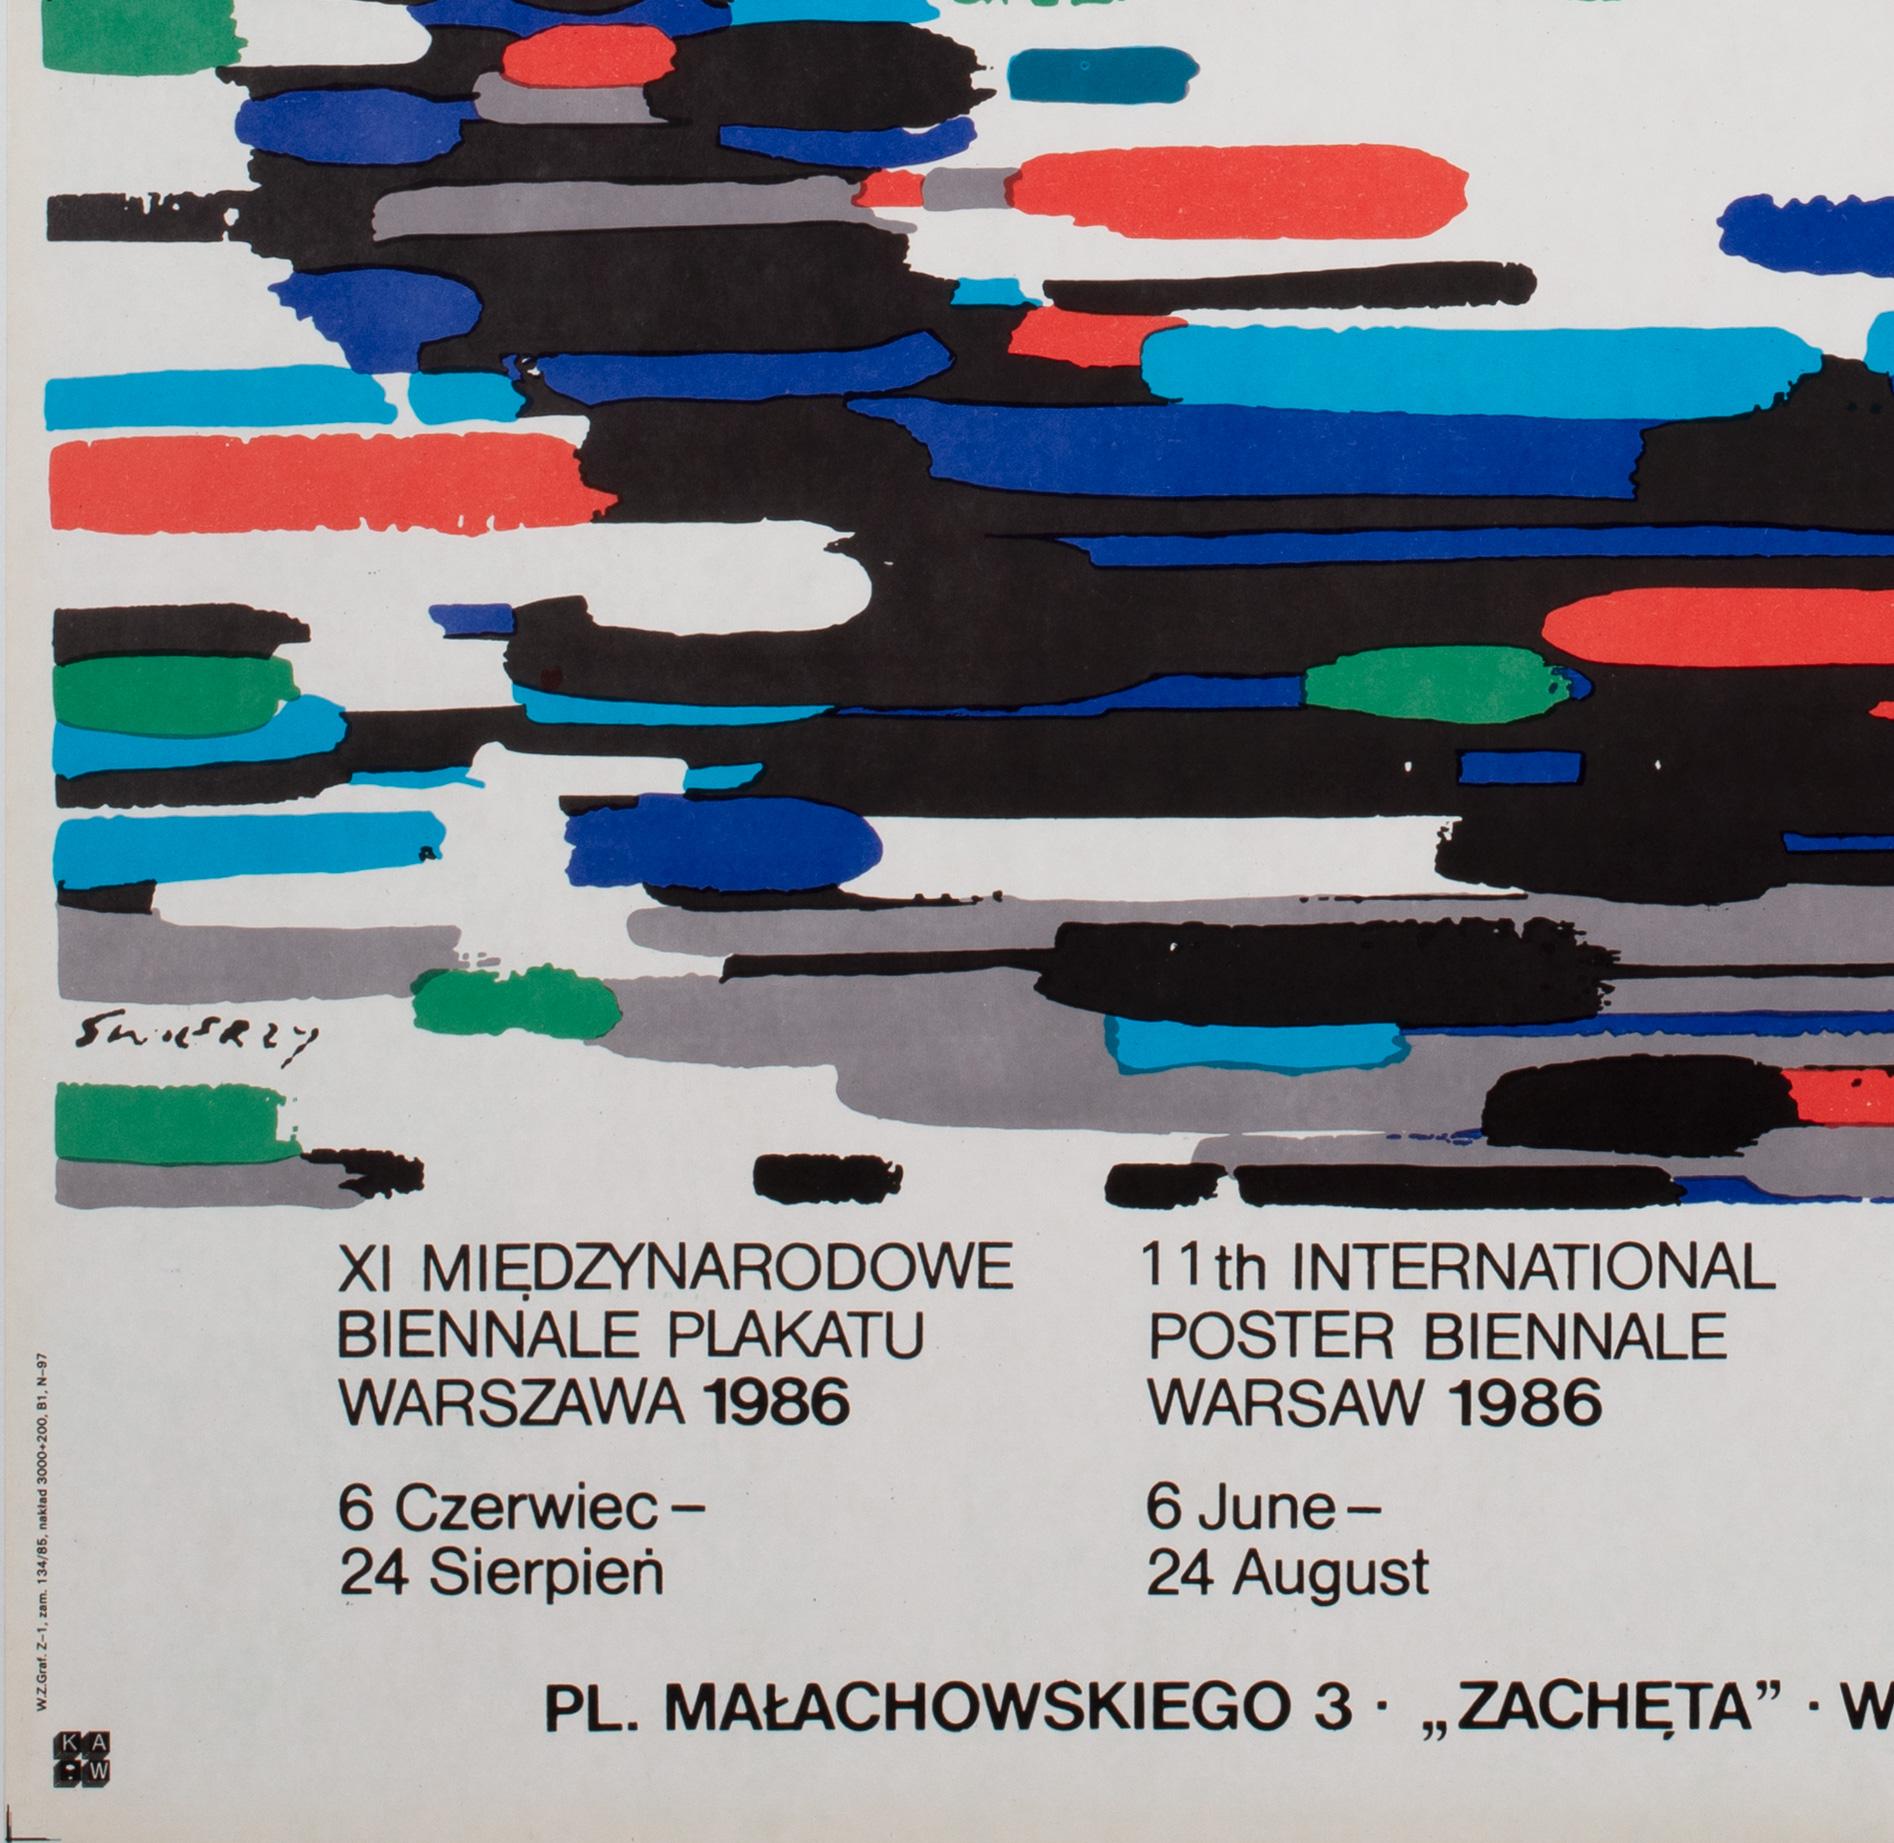 11th International Poster Biennale Warsaw 1986, Waldemar Swierzy 2